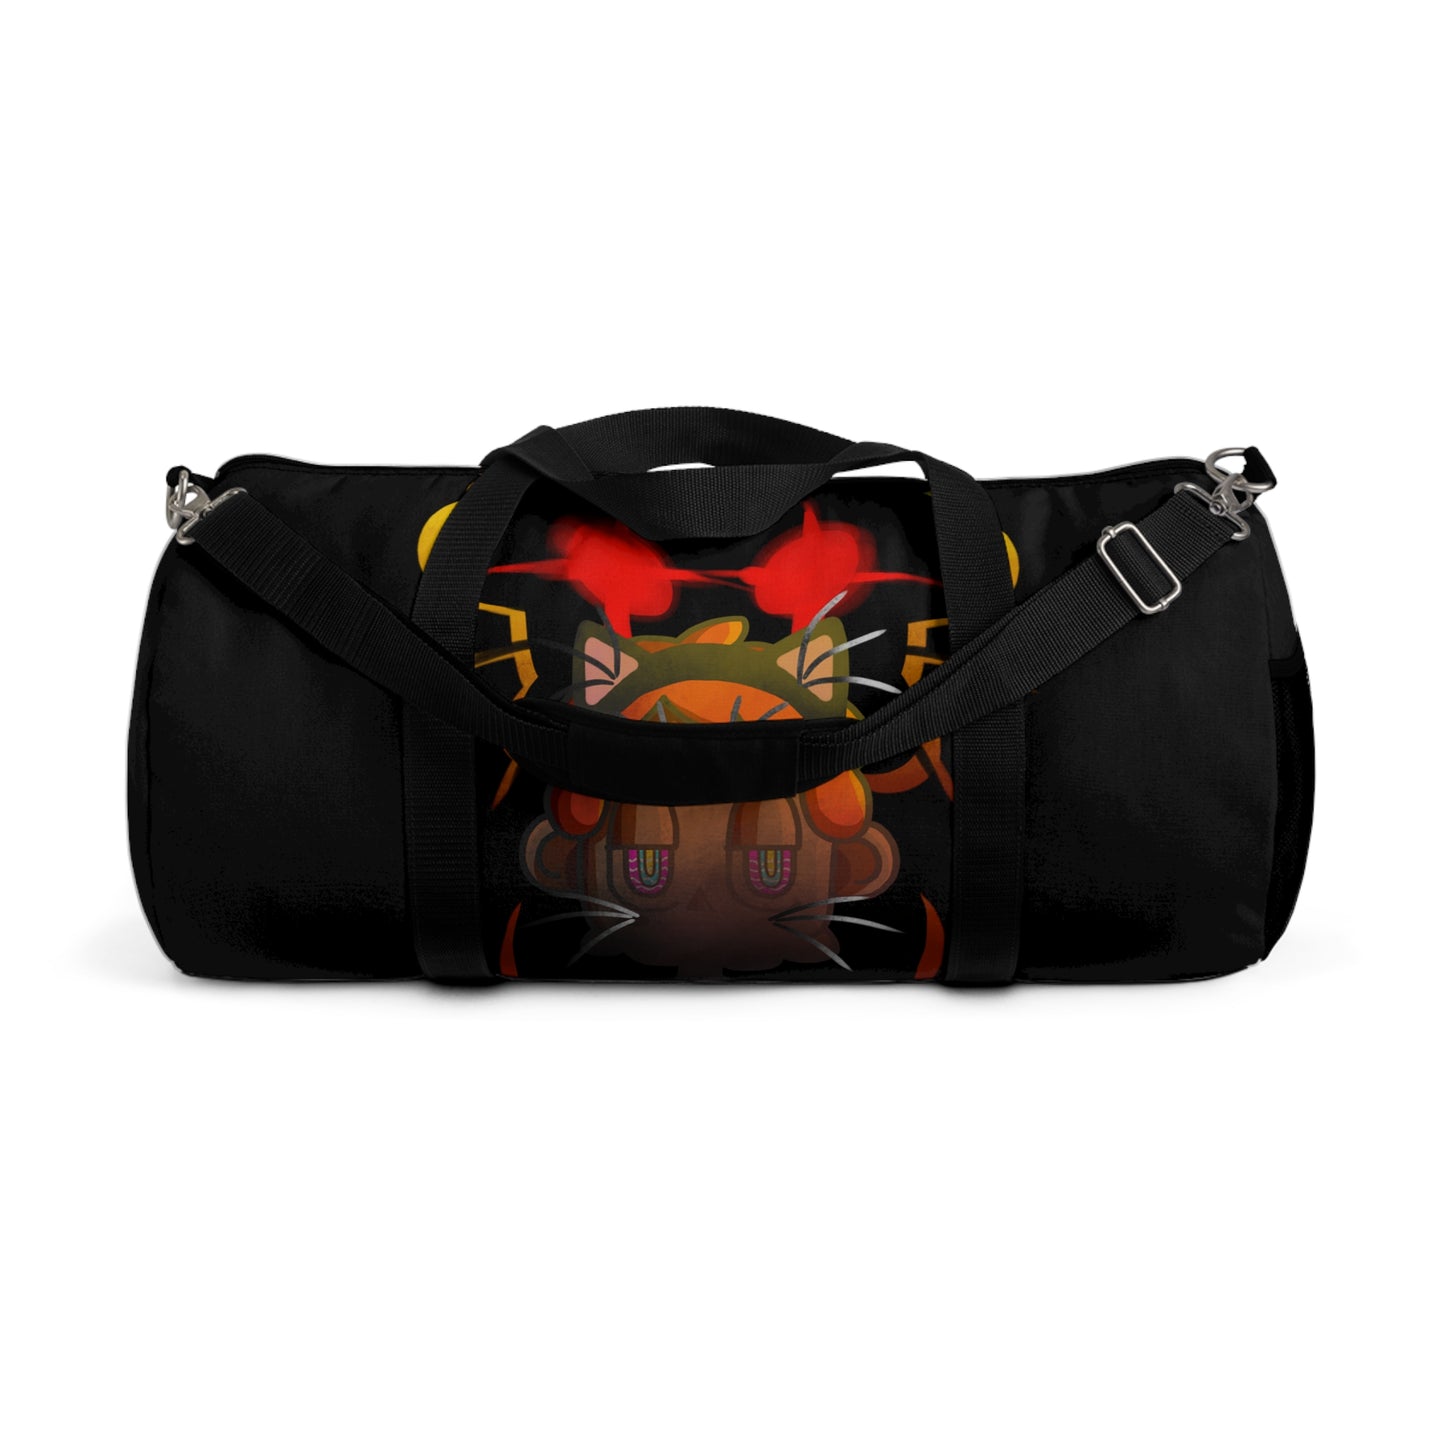 Angry Cat Duffle Bag